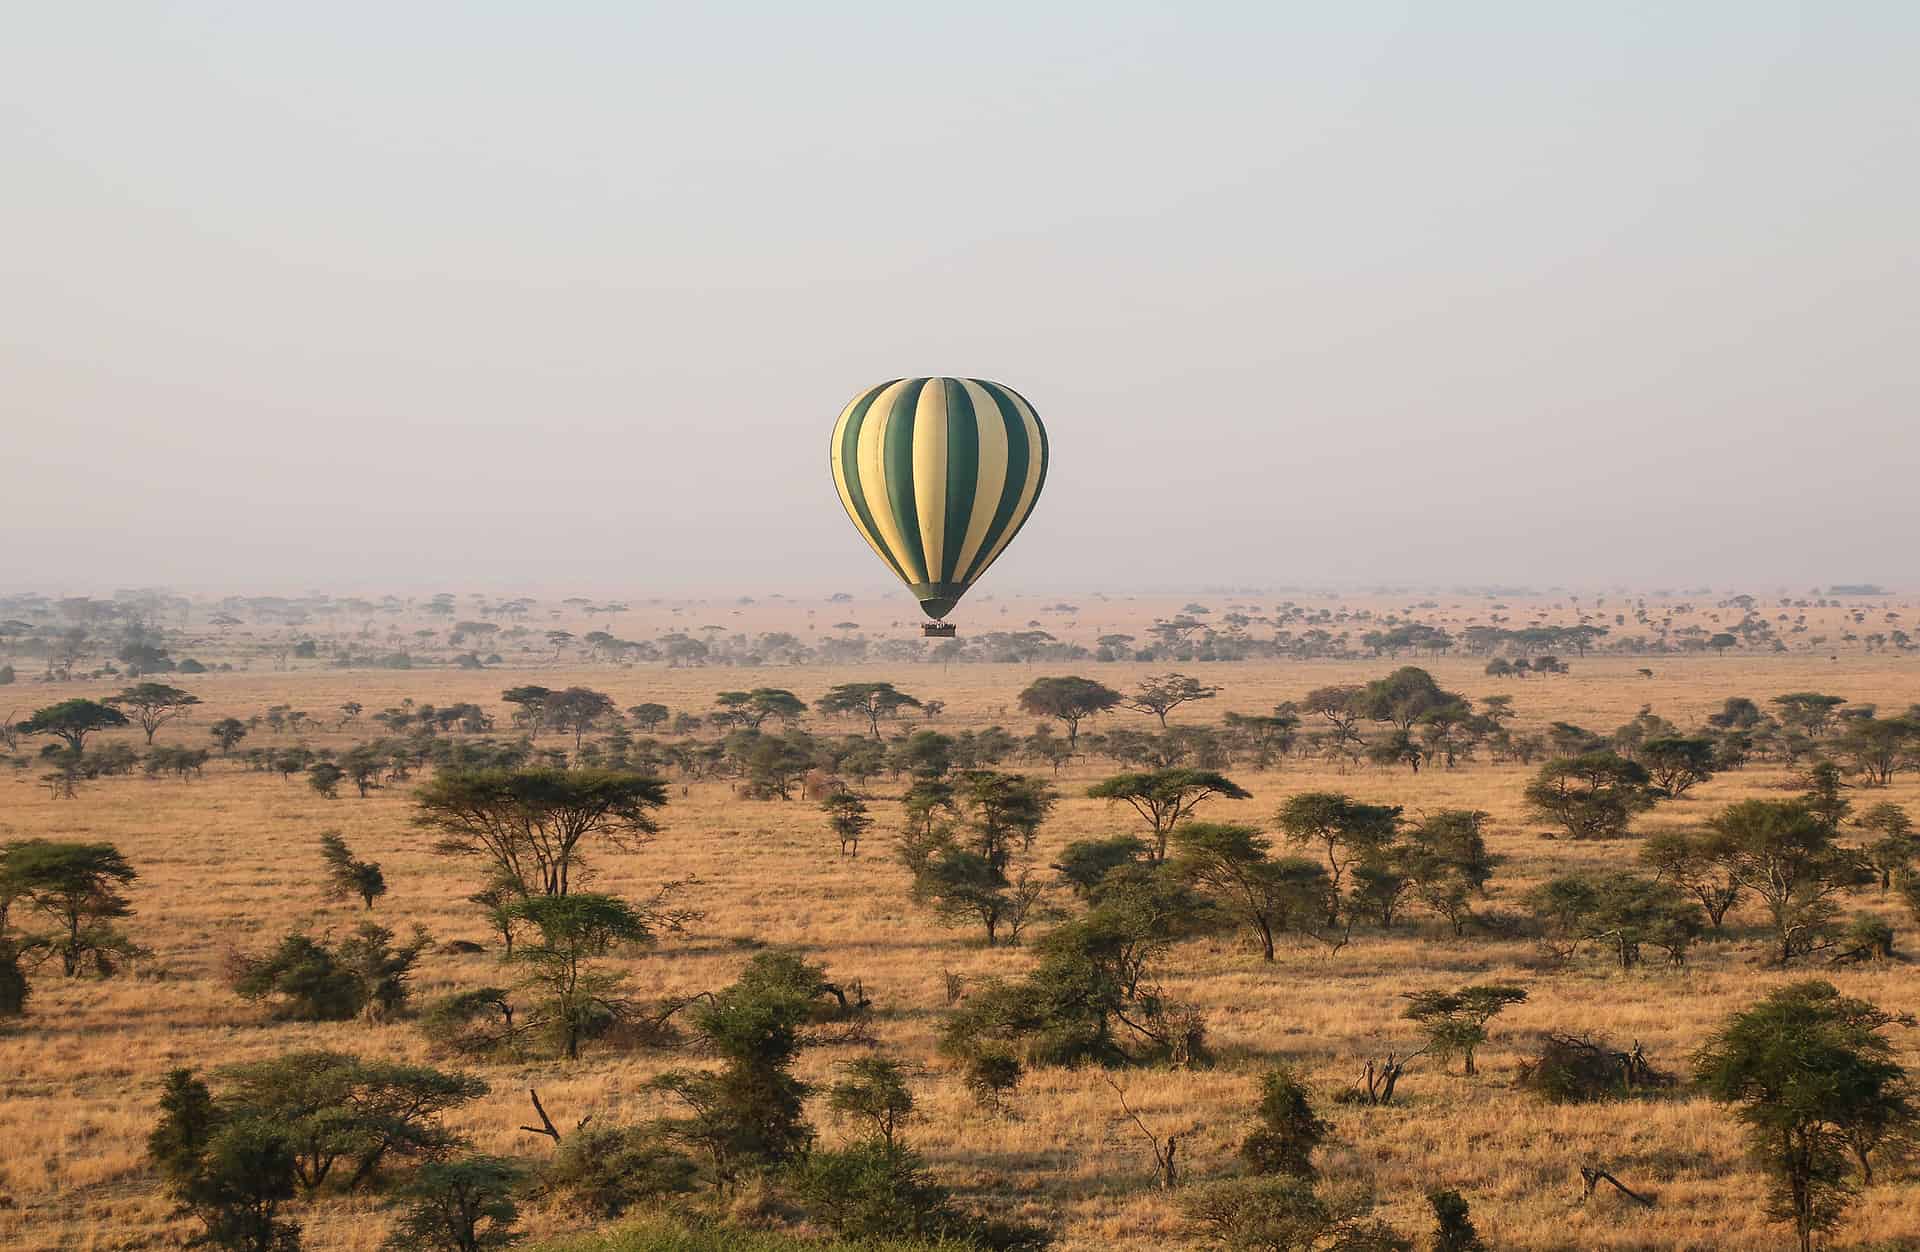 Serengeti Balloon Safari skimming the Acacia trees.